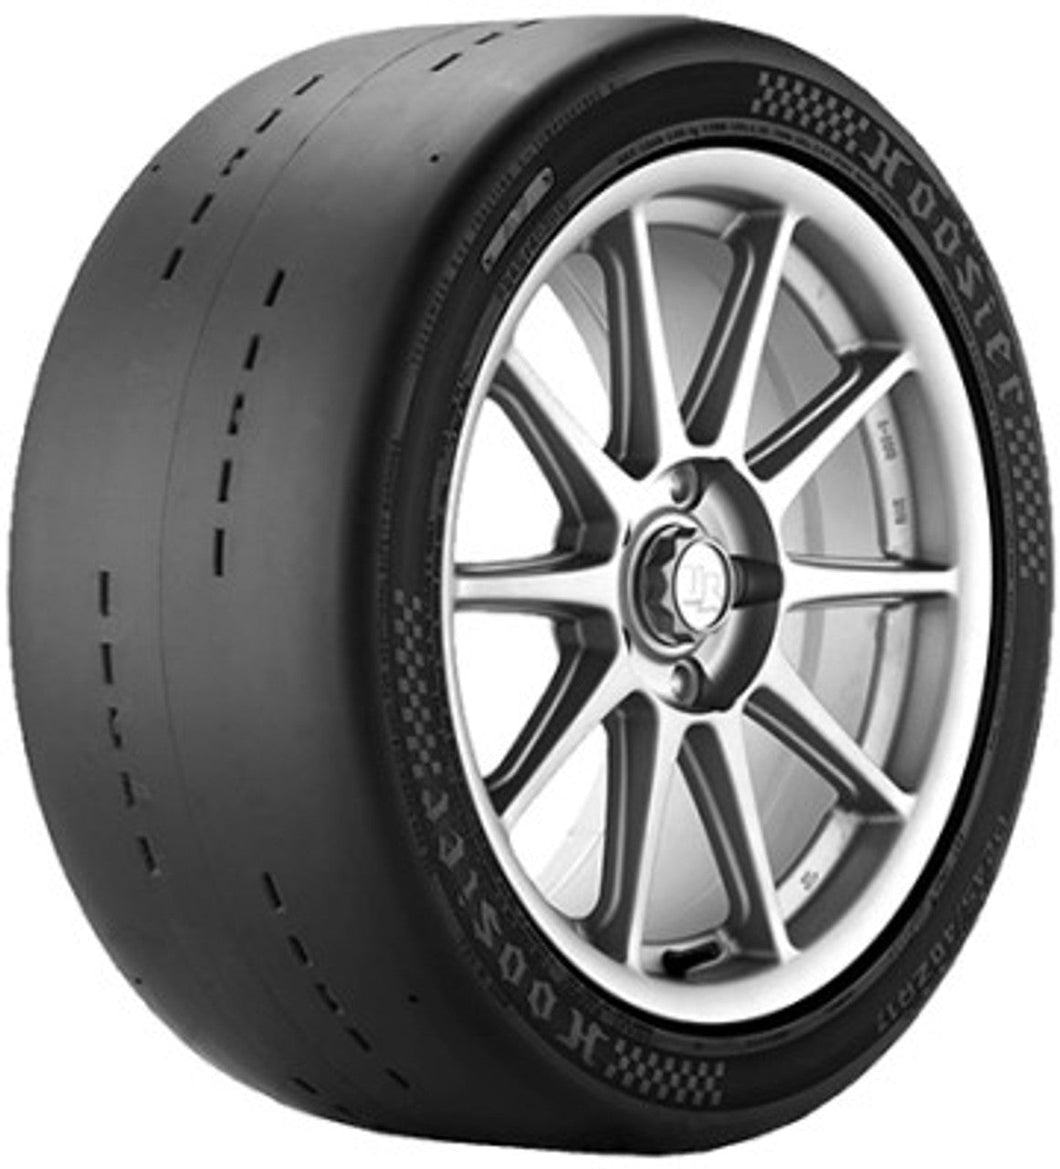 315/30 ZR19 Hoosier Tire Slick D.O.T Neumático